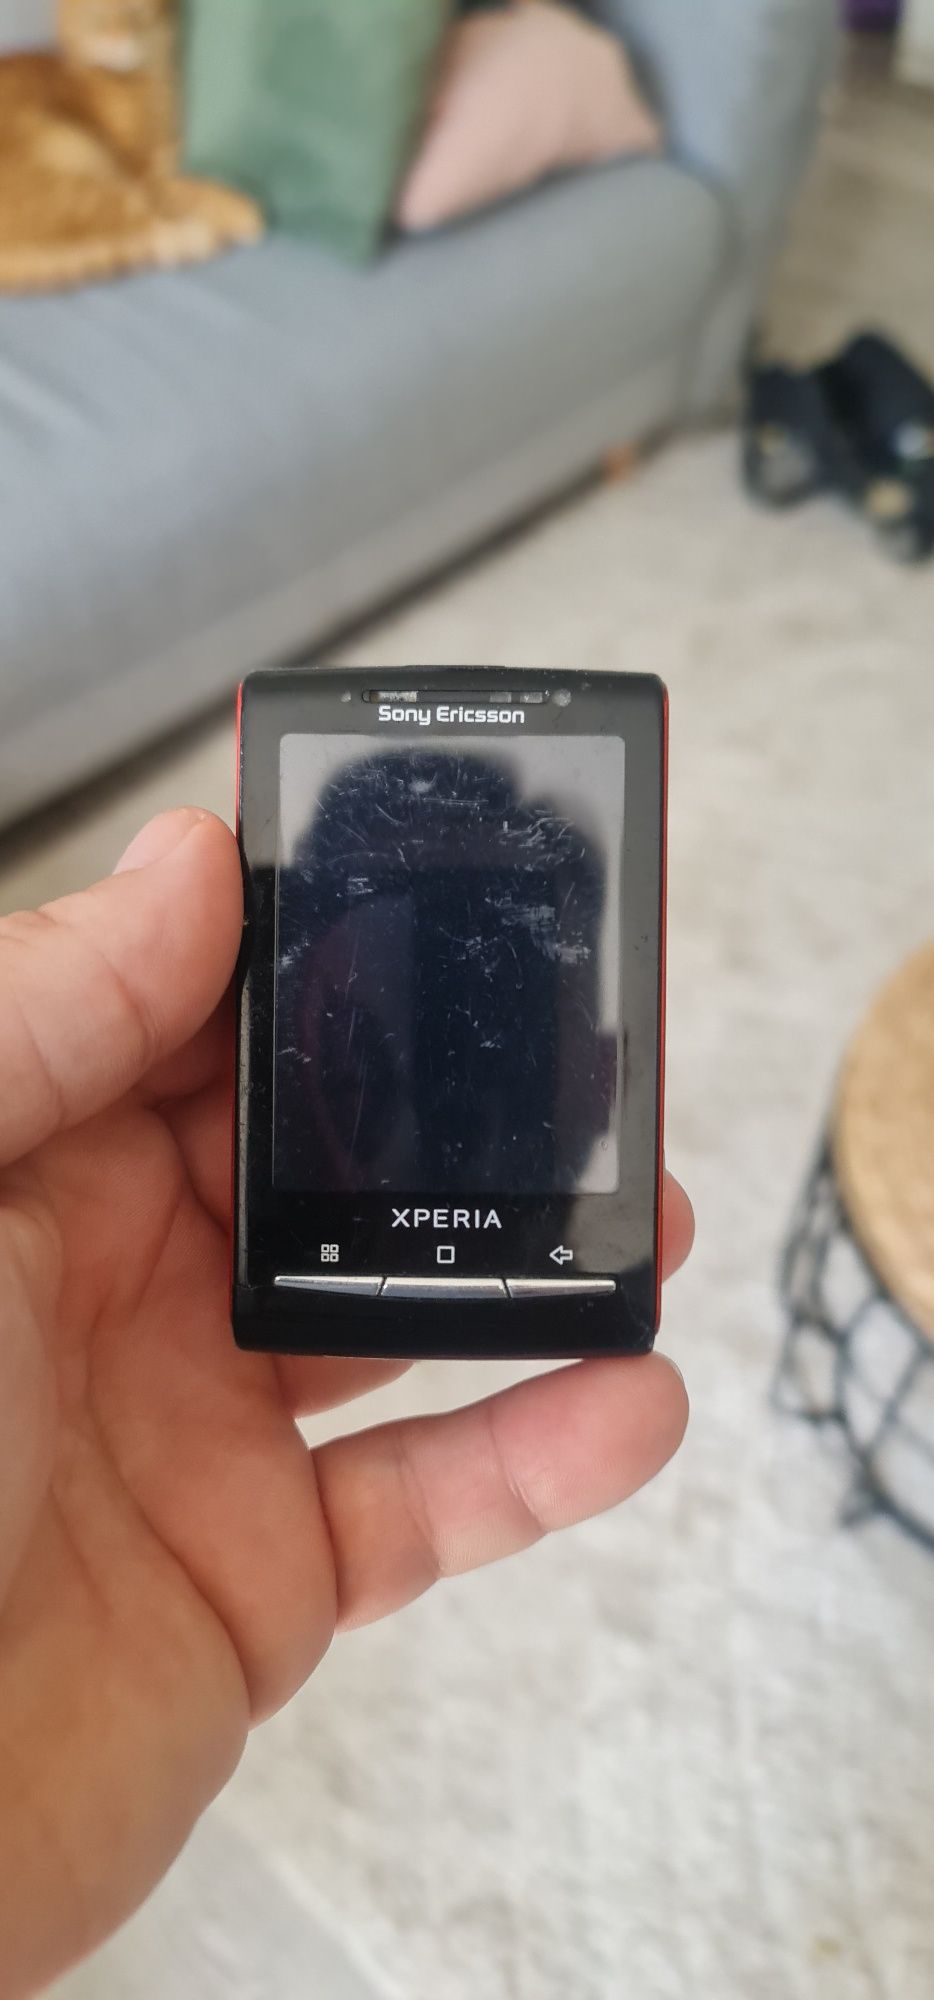 Sony Ericsson xperia mini 10